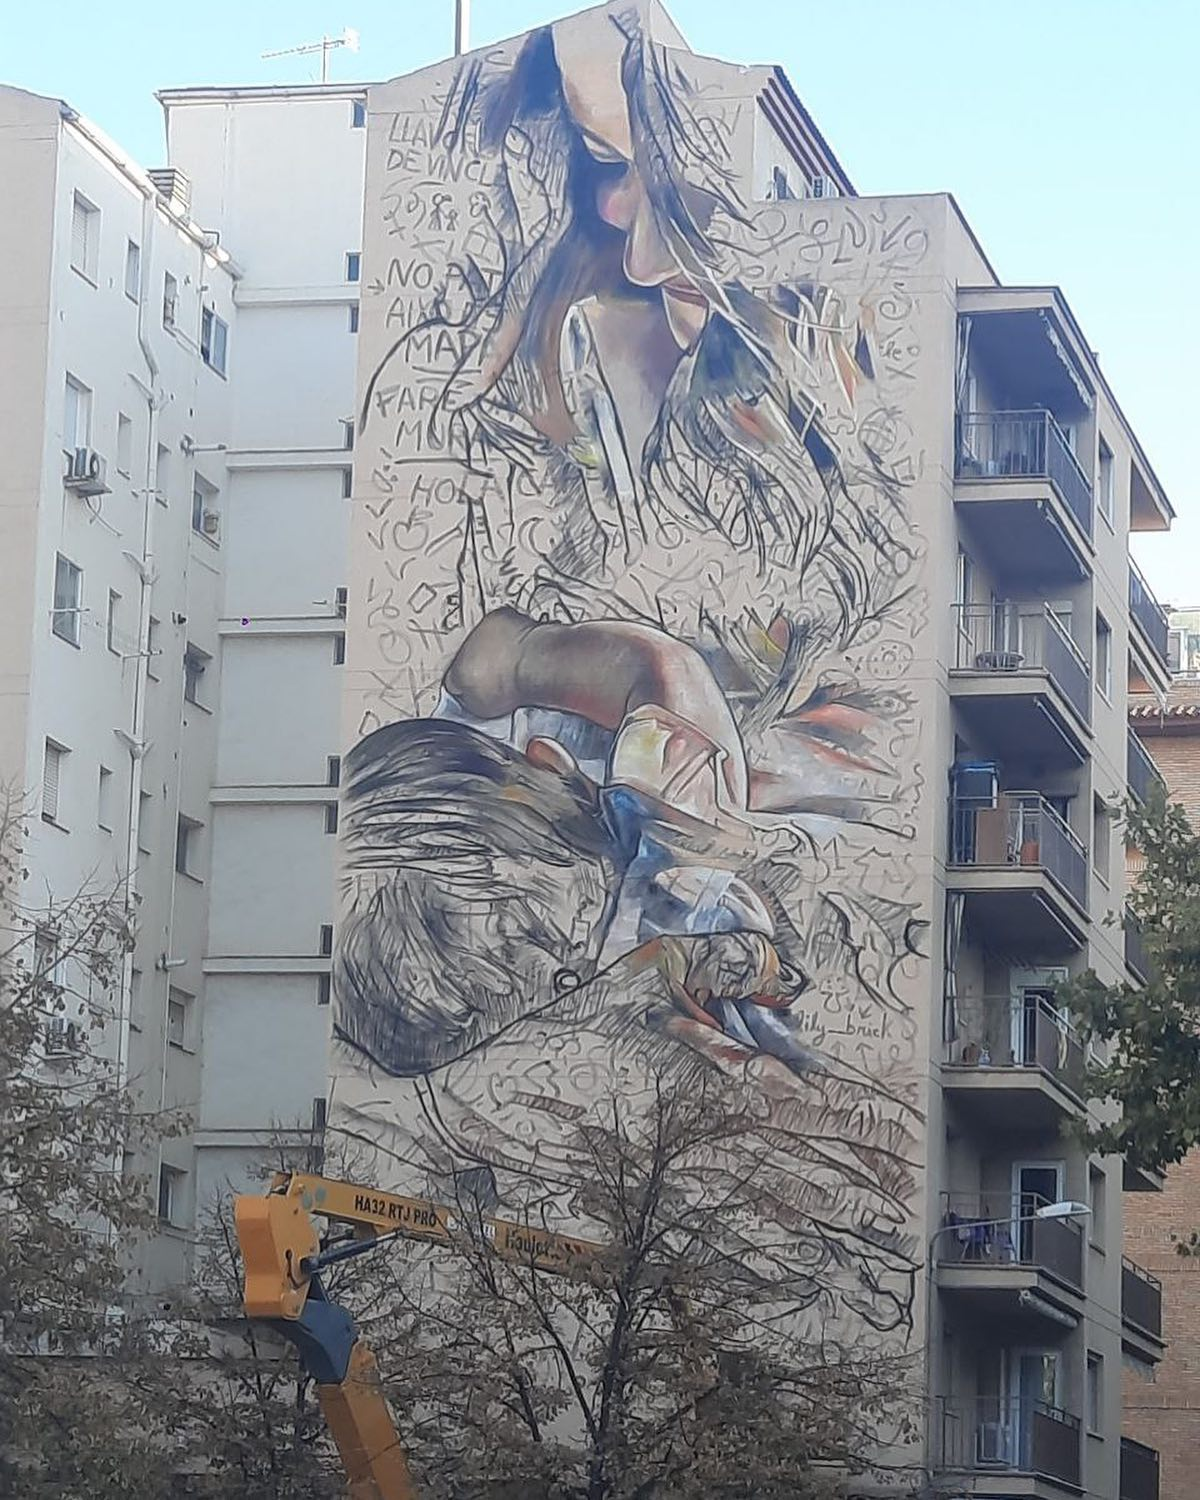 image mural lleida facebook